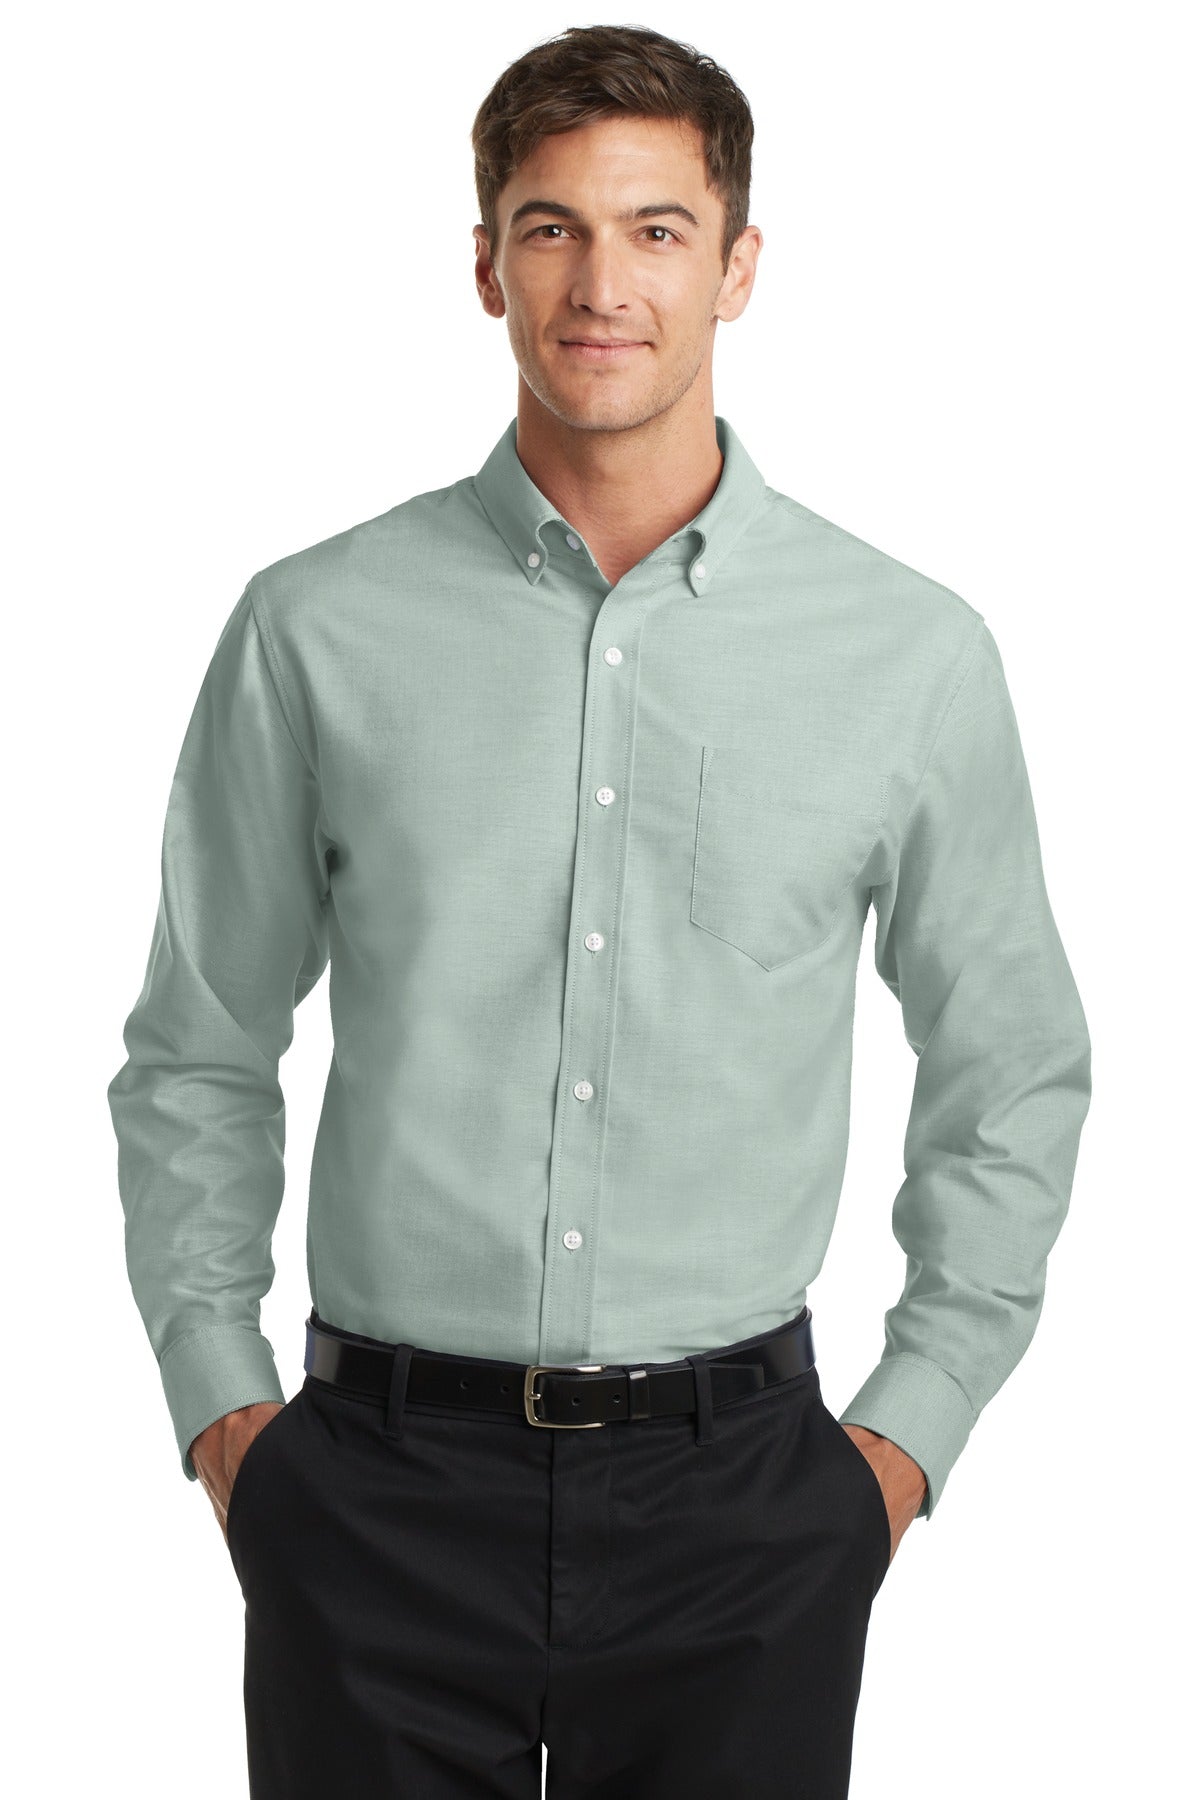 Port Authority® SuperPro™ Oxford Shirt. S658